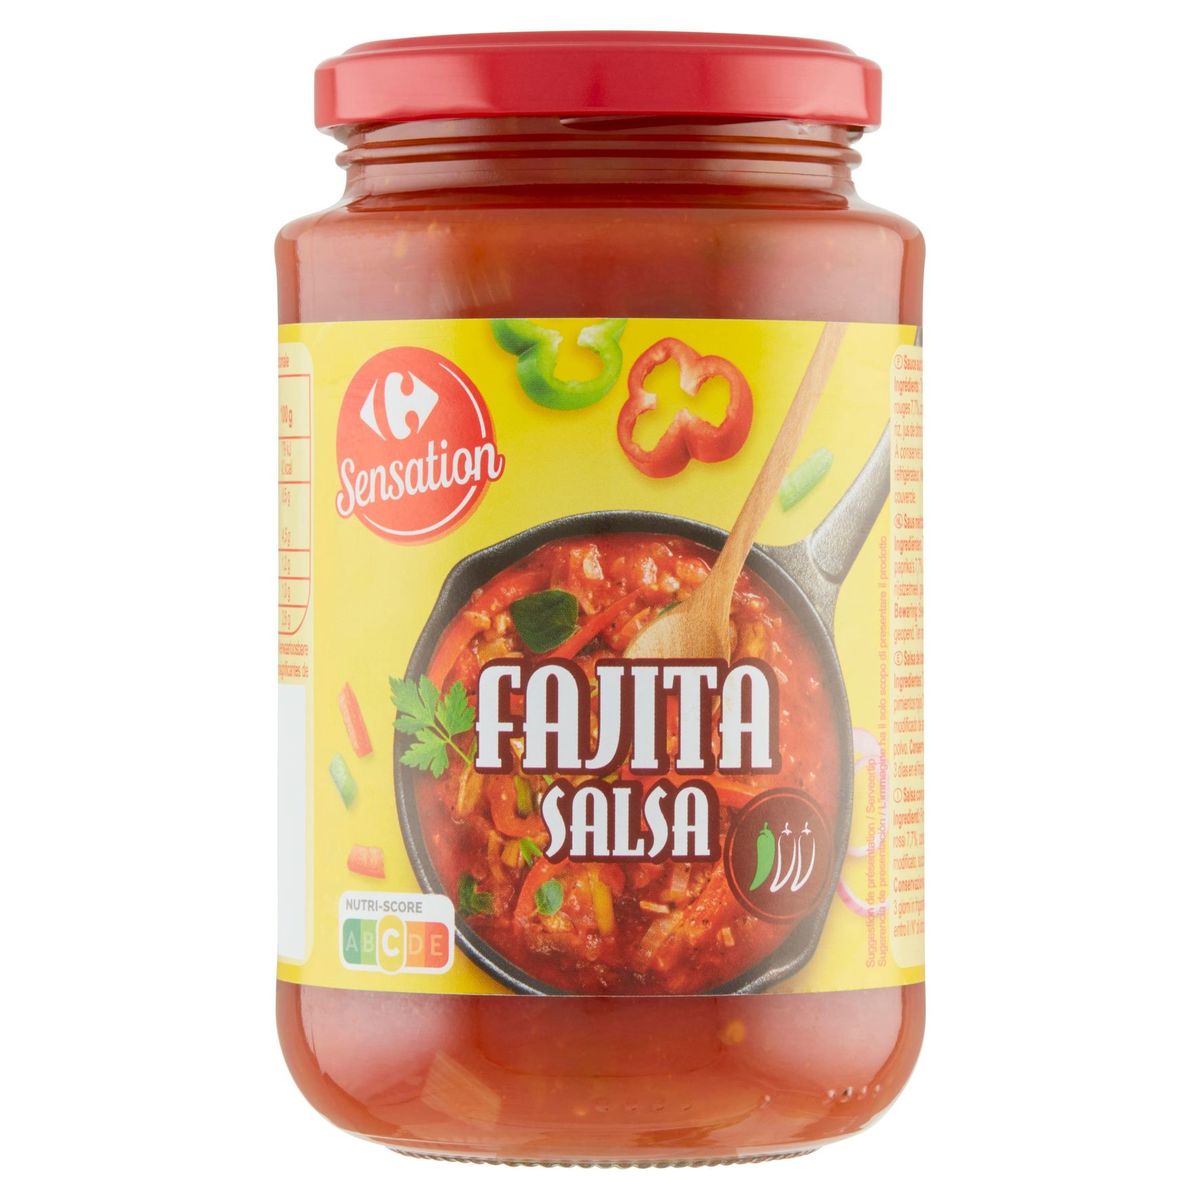 Carrefour Sensation Fajita Salsa 430 g